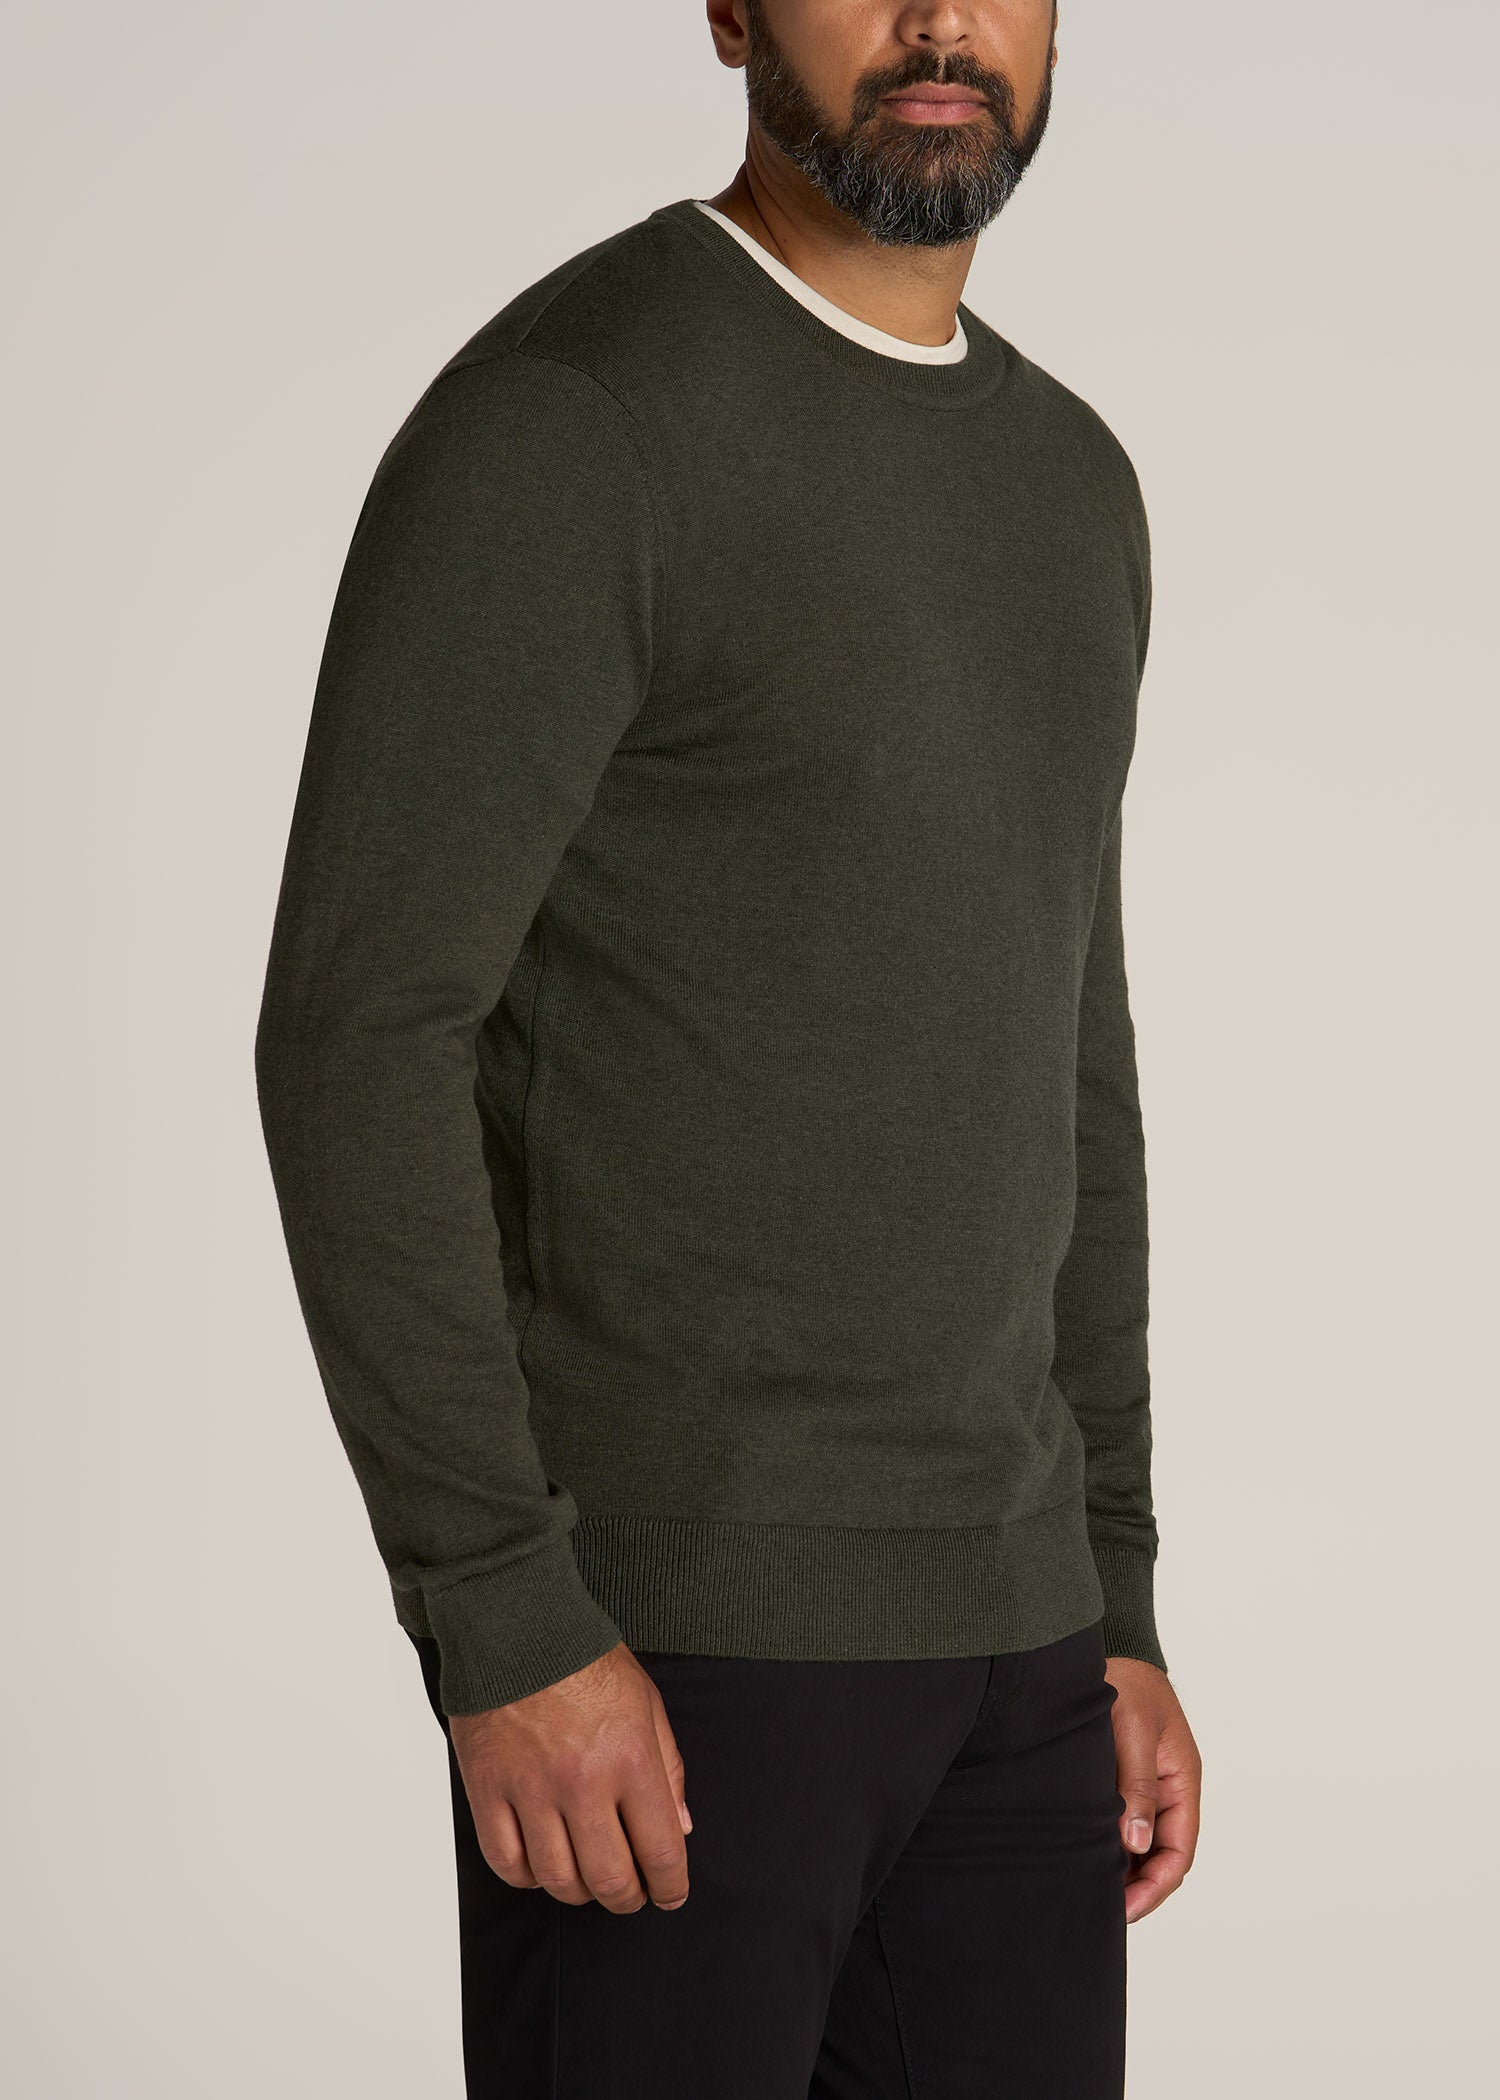 Everyday Crewneck Tall Men's Sweater